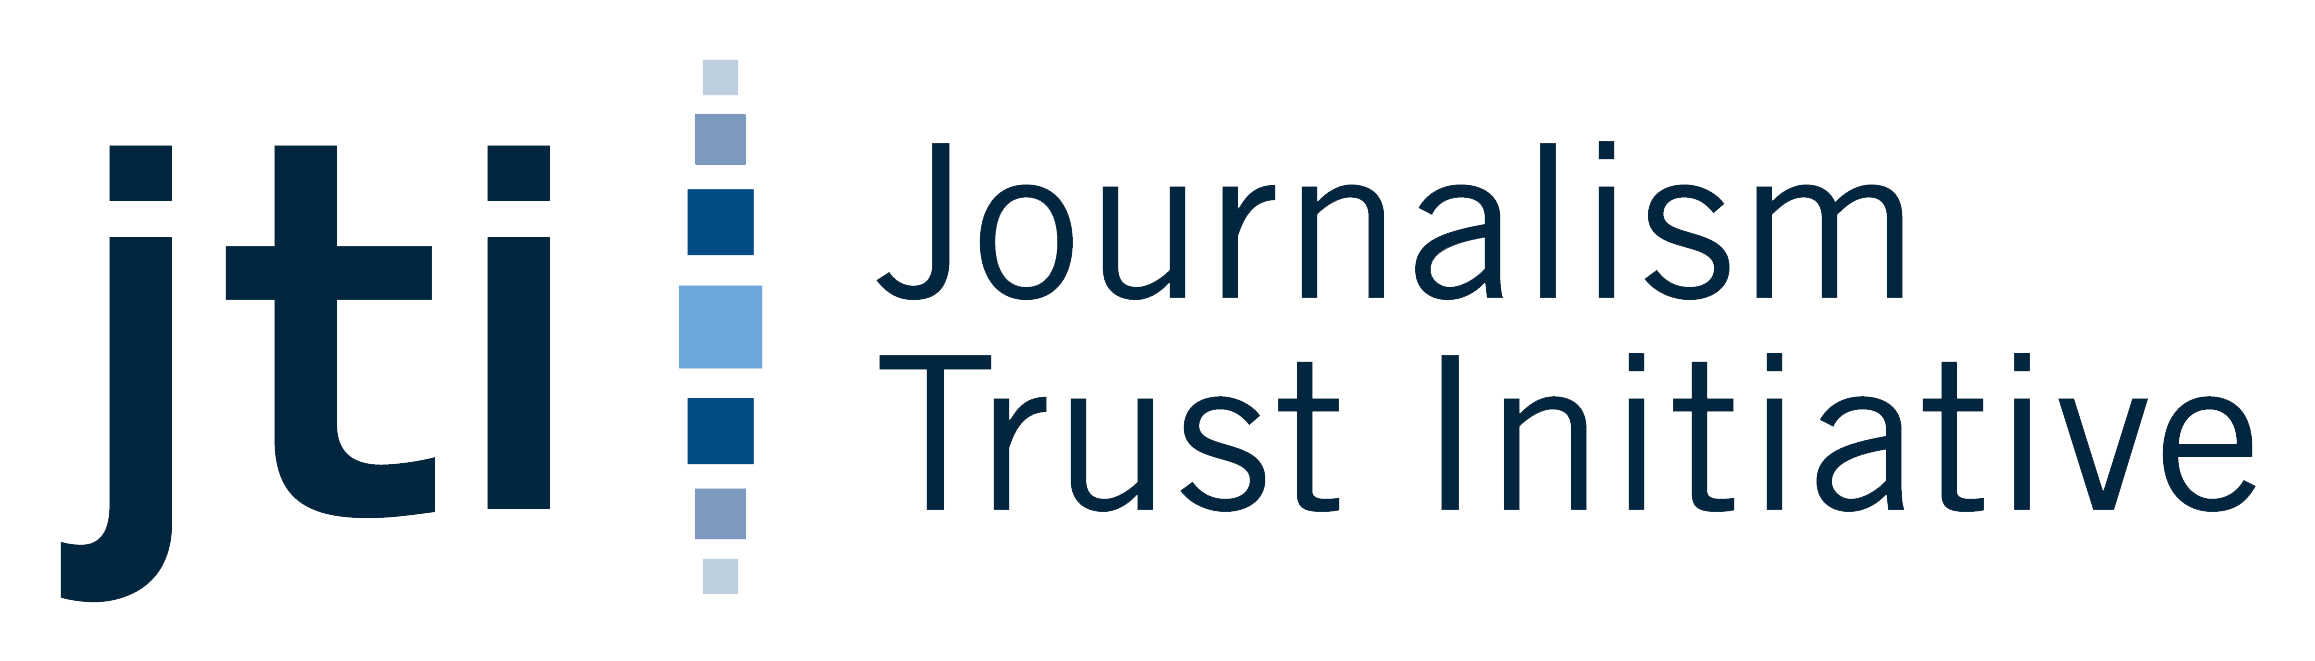 Journalism Trust Initiative logo